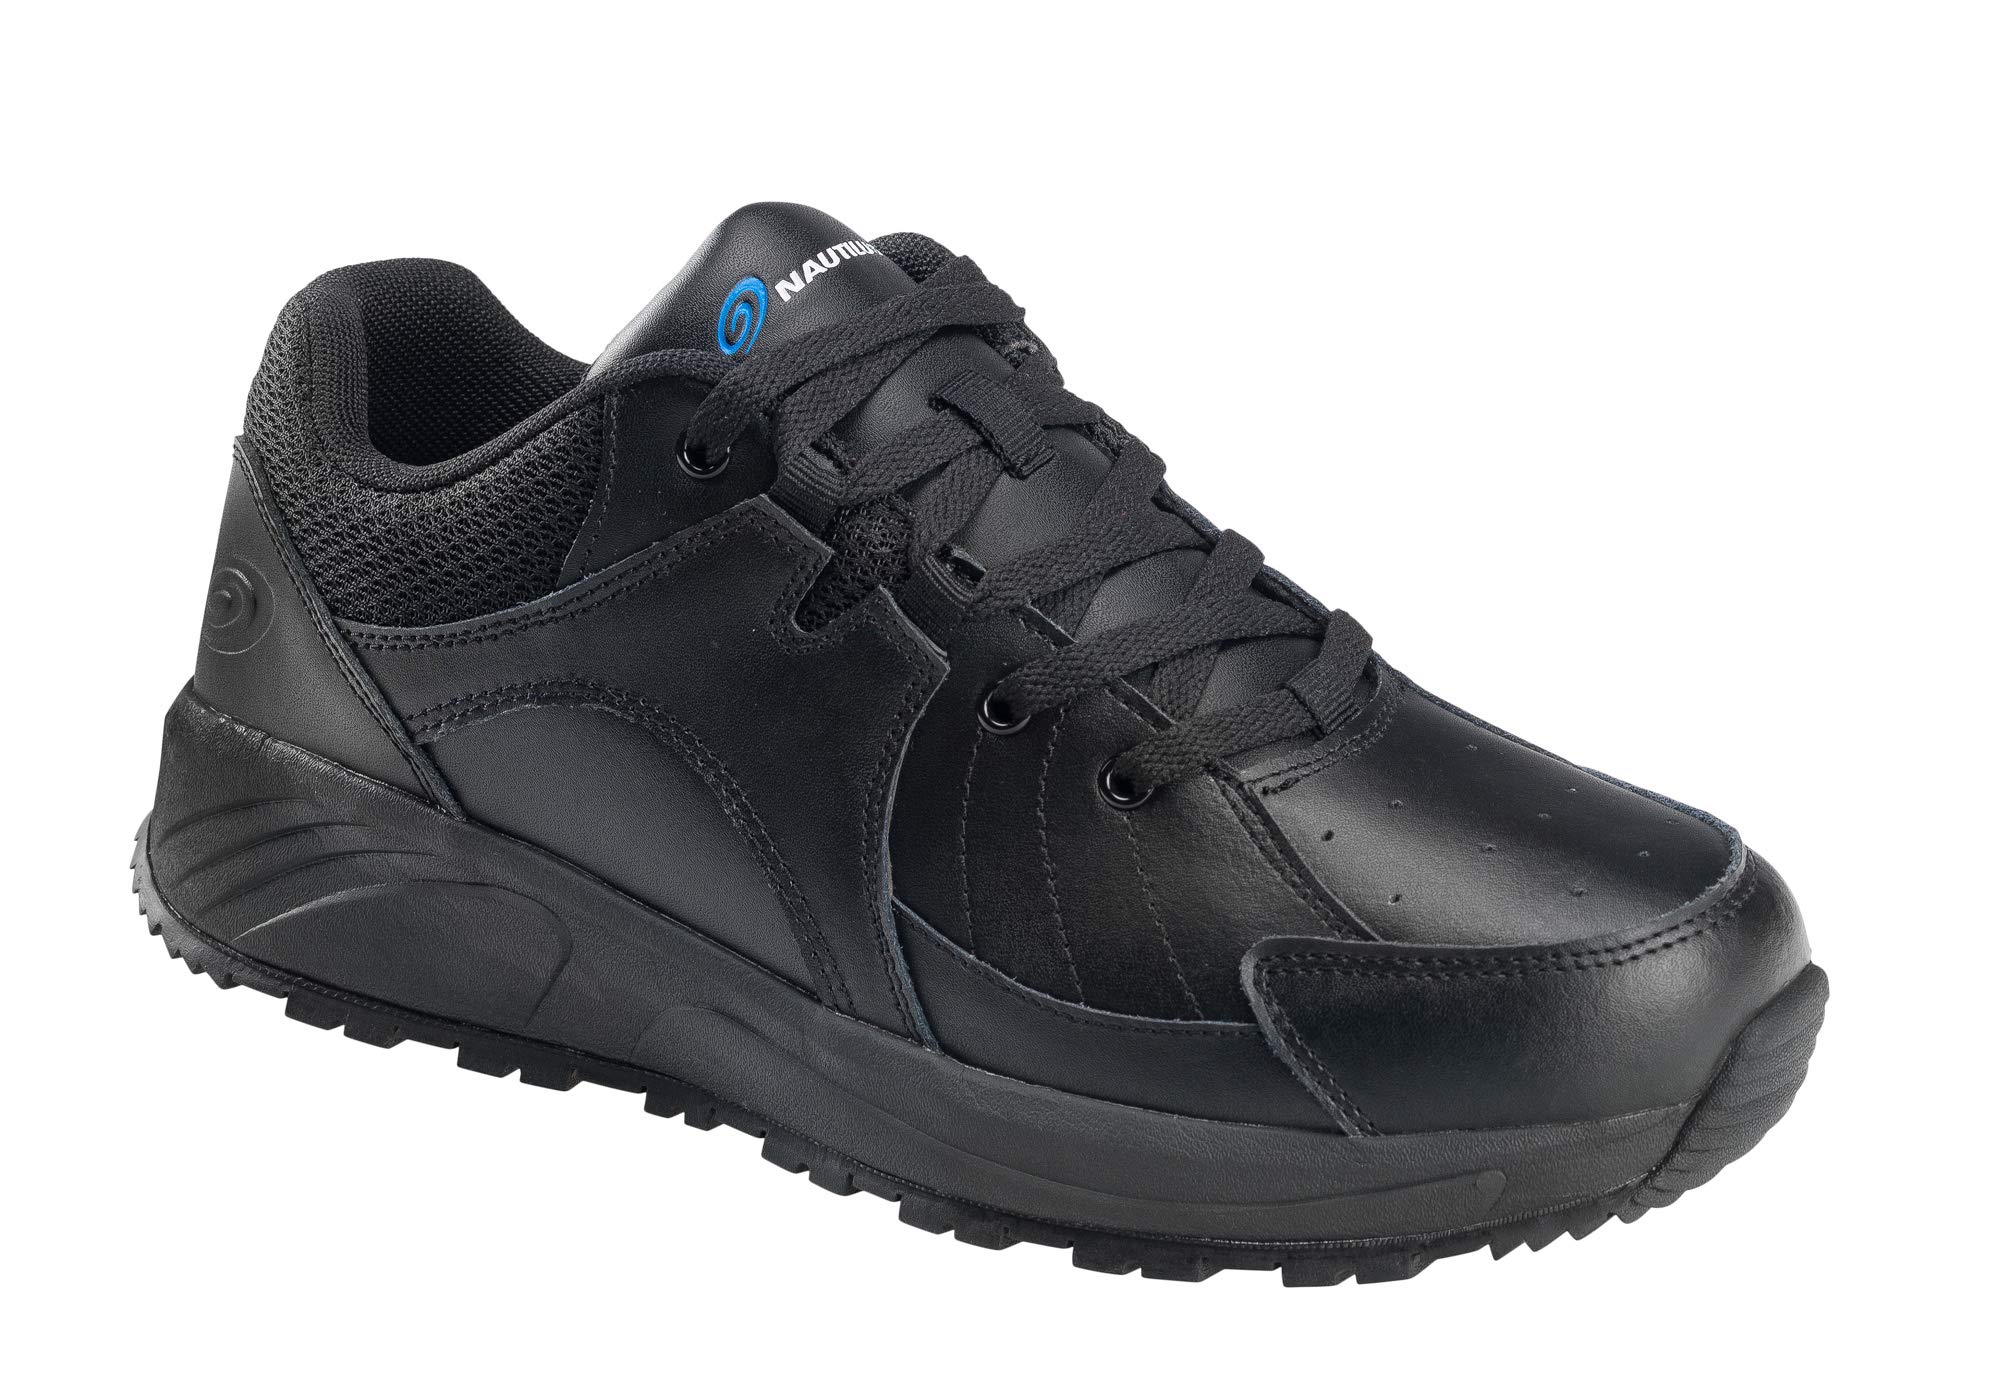 Nautilus Safety Footwear Men's 5020 Skidbuster Athletic Slip-Resistant Work Shoe, Black